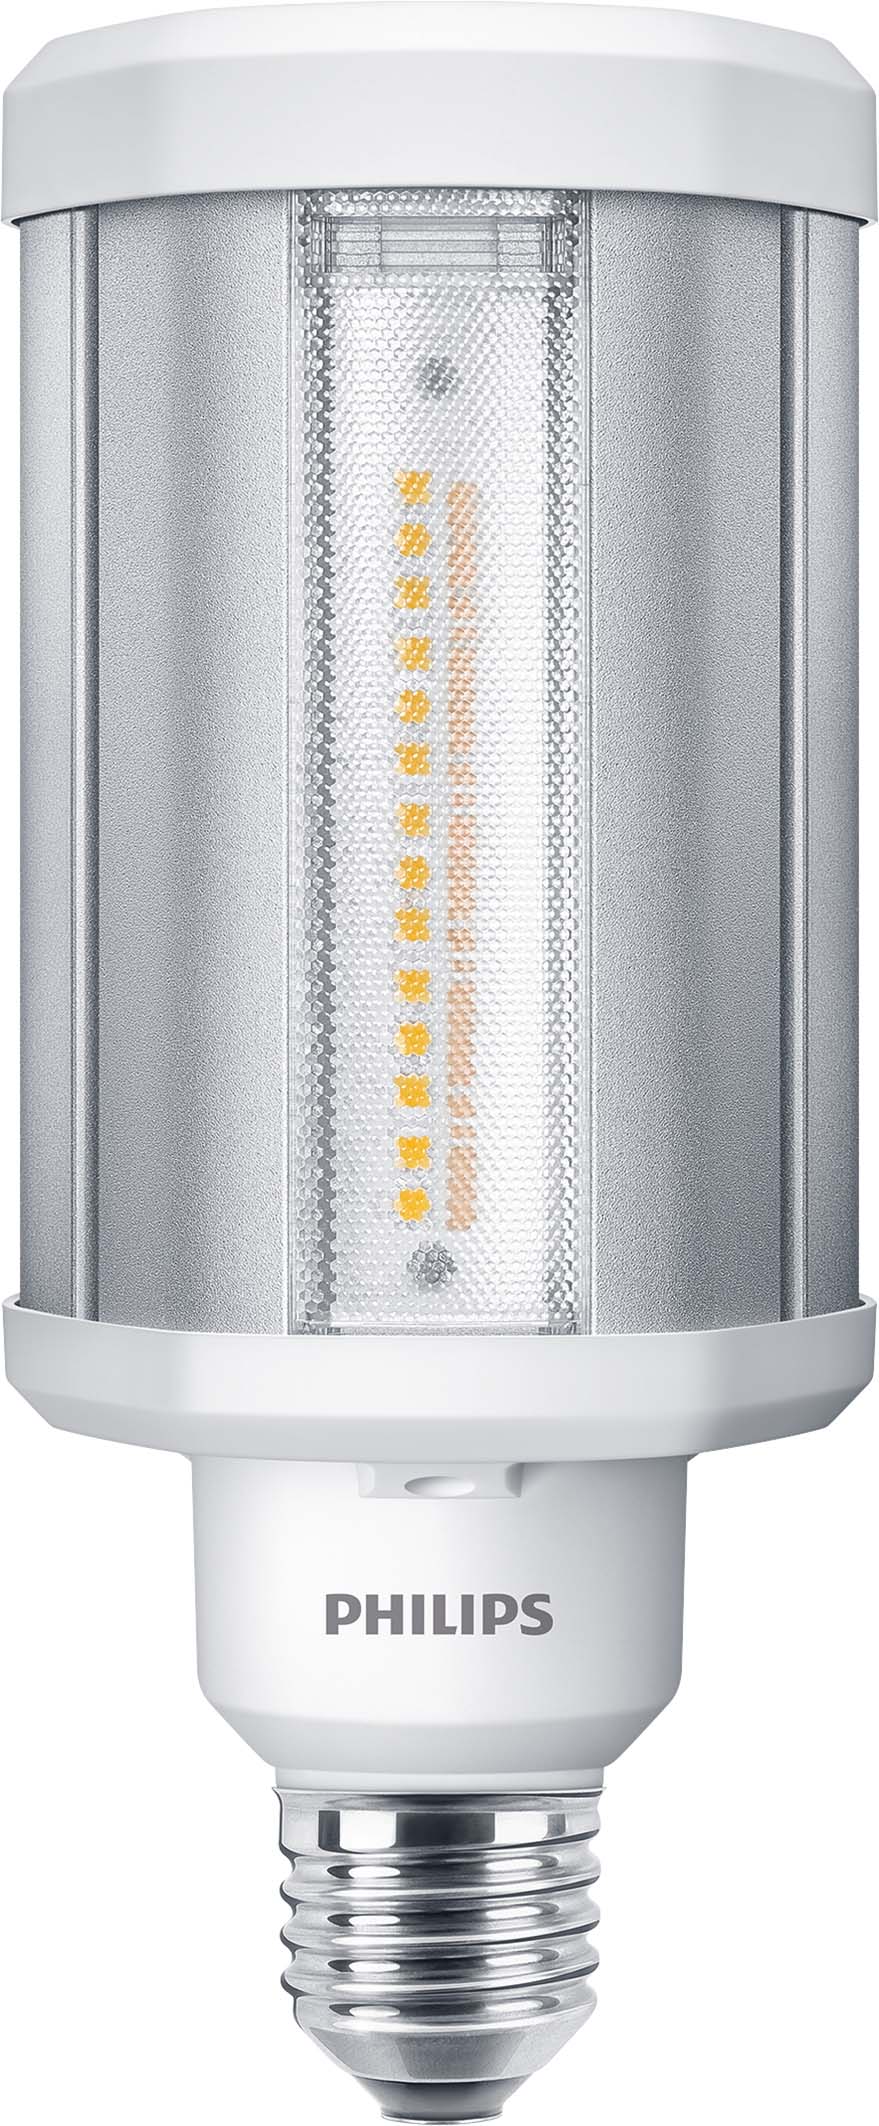 Philips Lighting LED-Lampe E27 3000K TForce LED #63814600